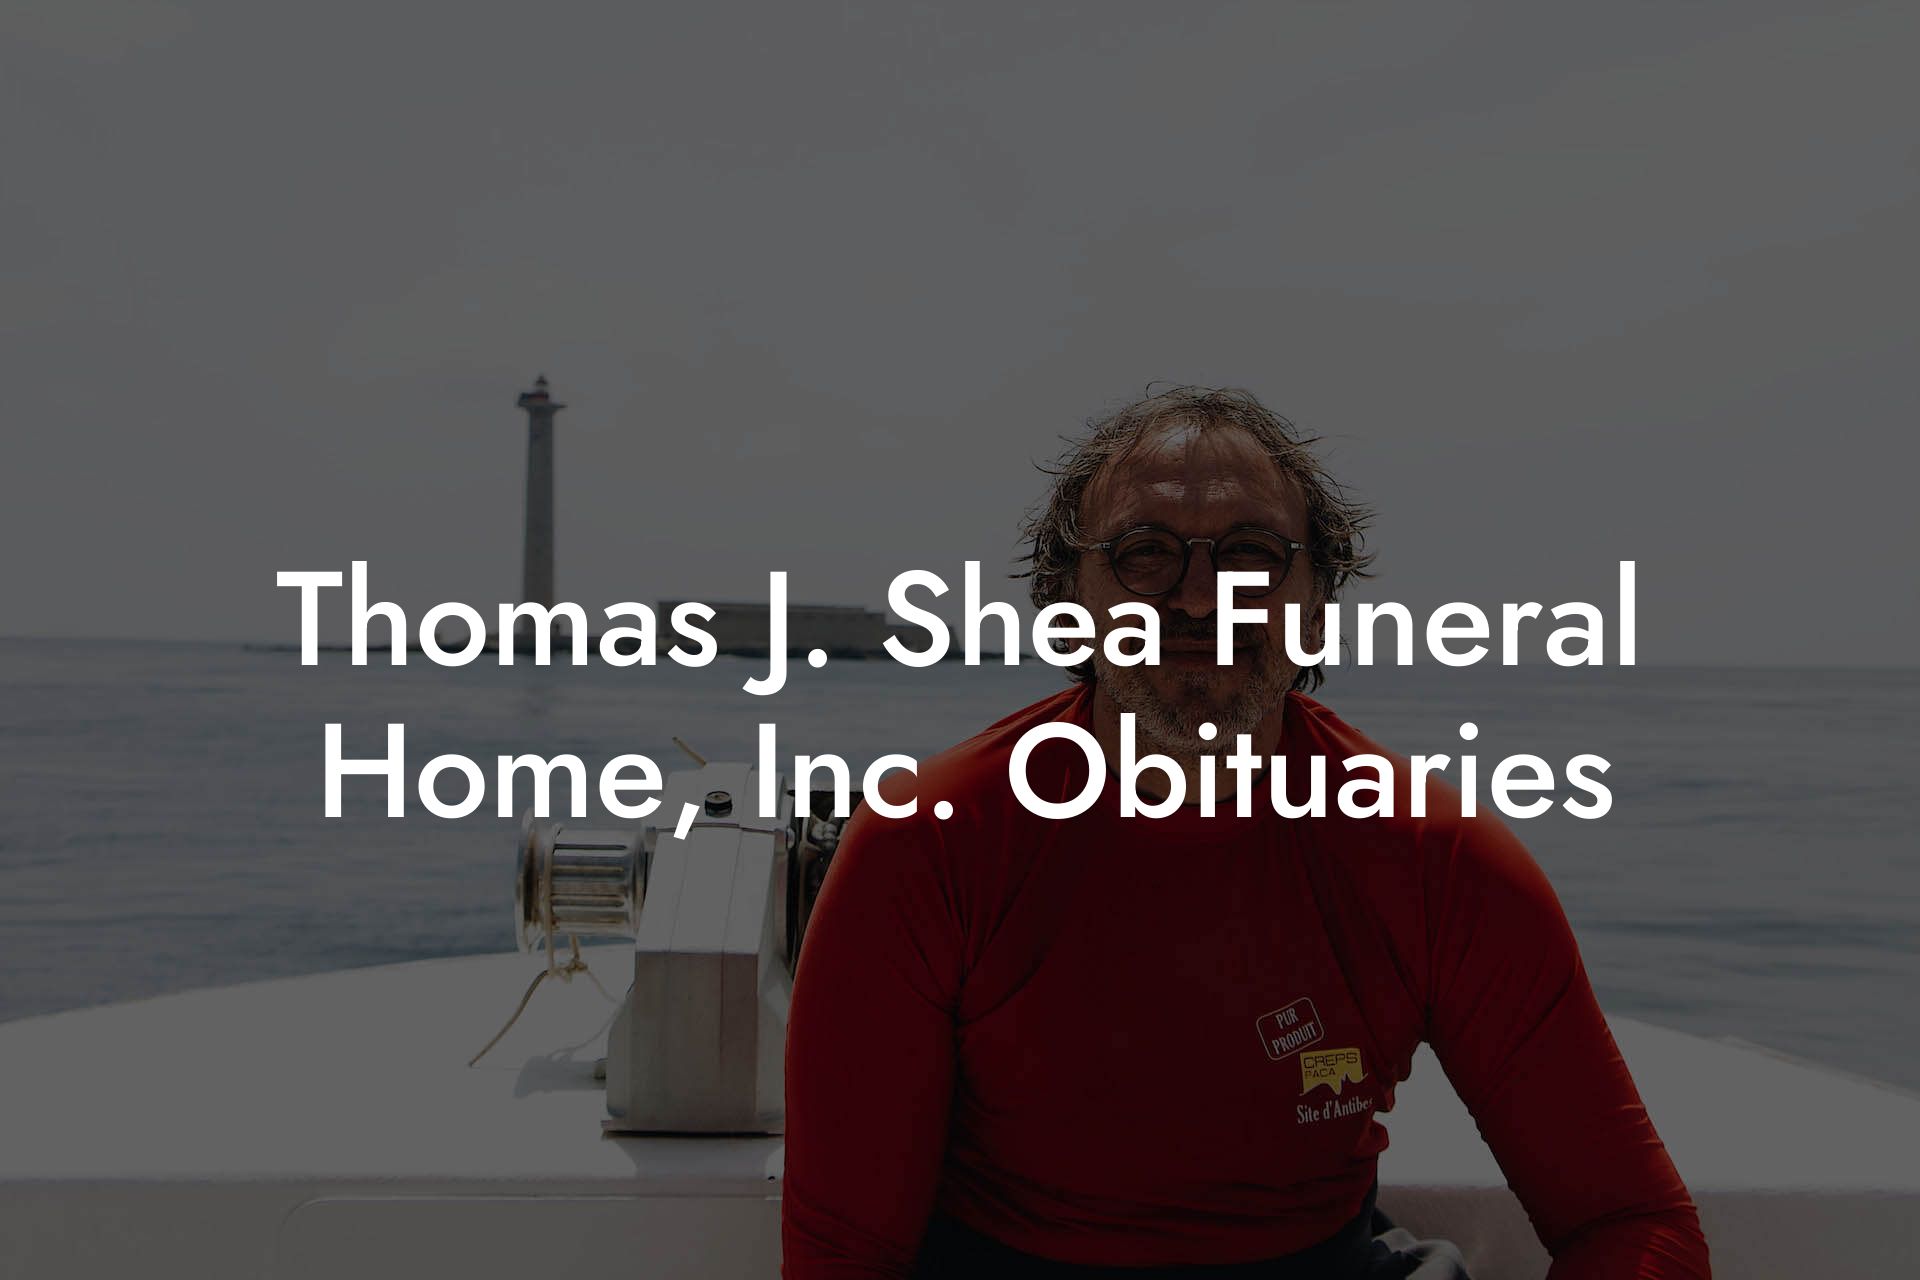 Thomas J. Shea Funeral Home, Inc. Obituaries